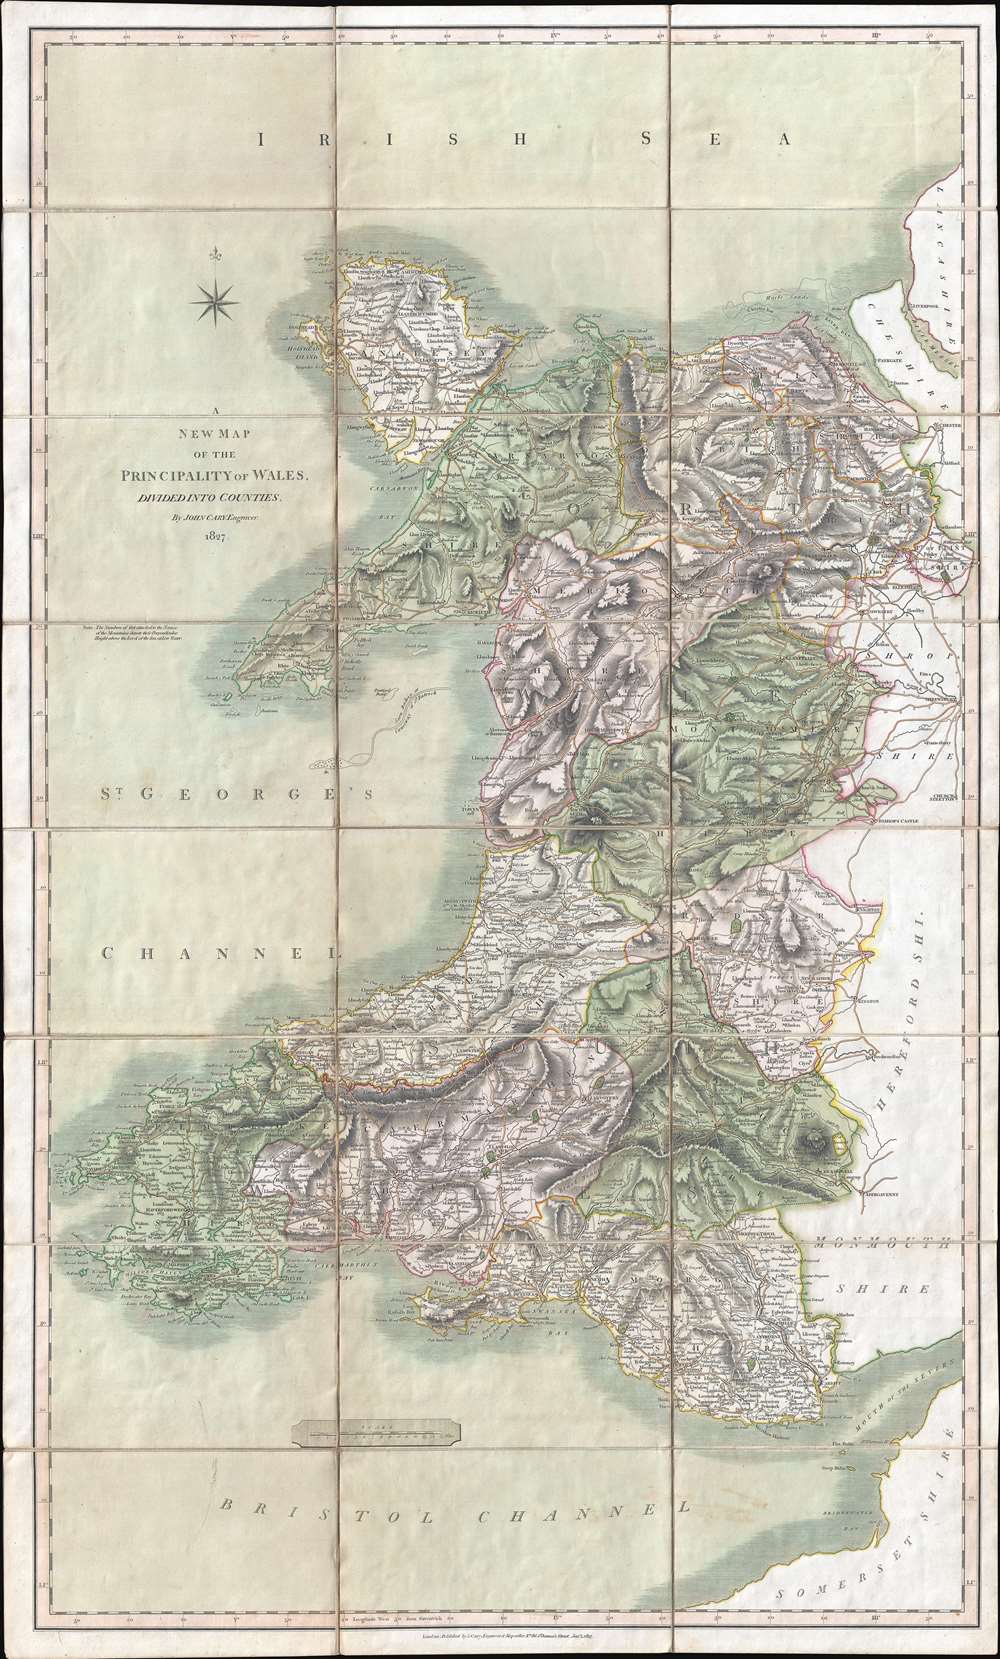 Map Of New England Geographicus Rare Antique Maps Vrogue